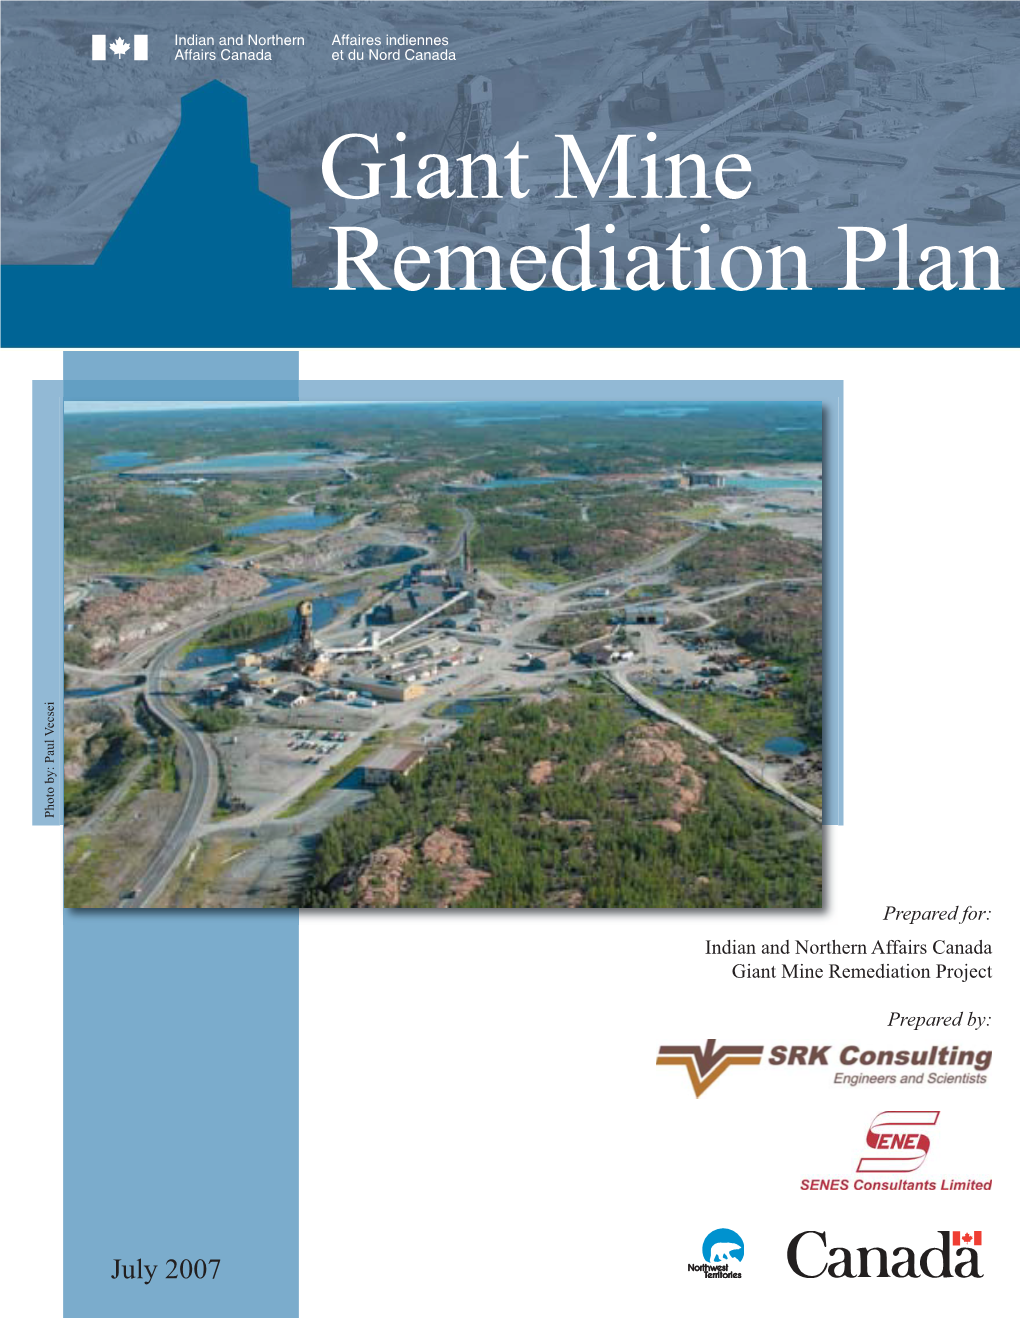 Giant Mine Remediation Plan Photo By: Paul Vecsei Photo By: Paul